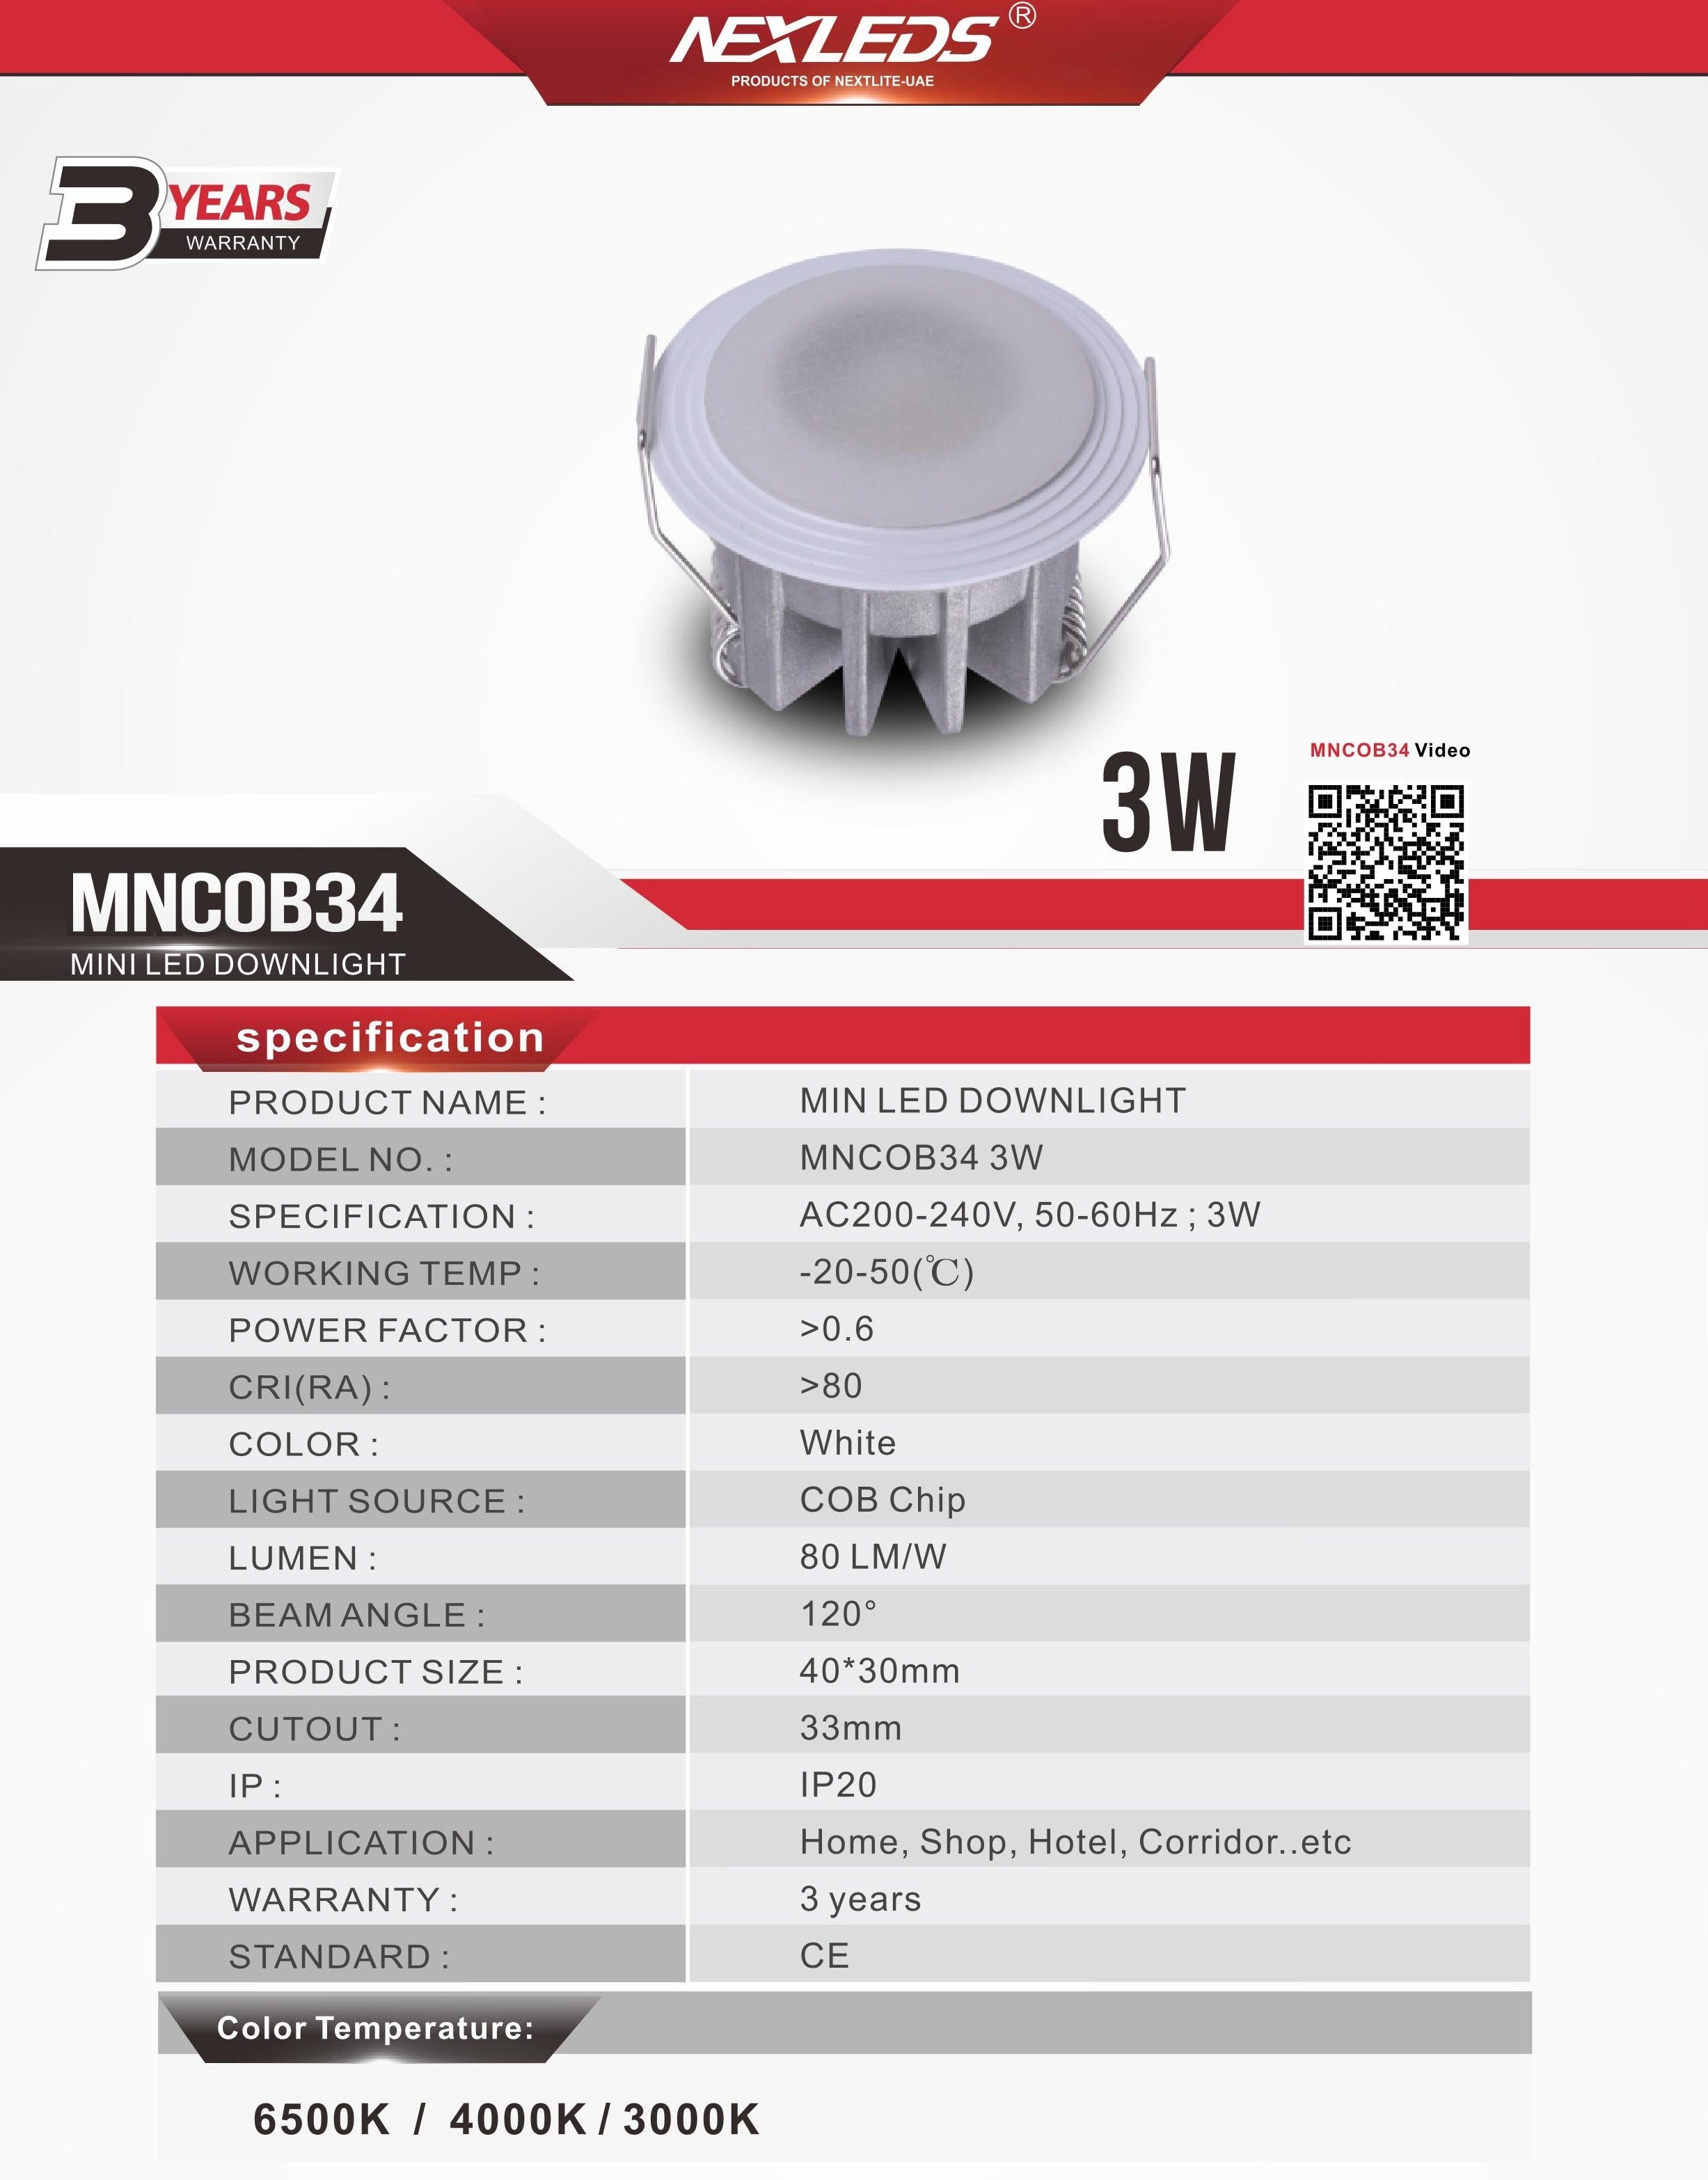 MNCOB34 3W MINI LED DOWNLIGHT